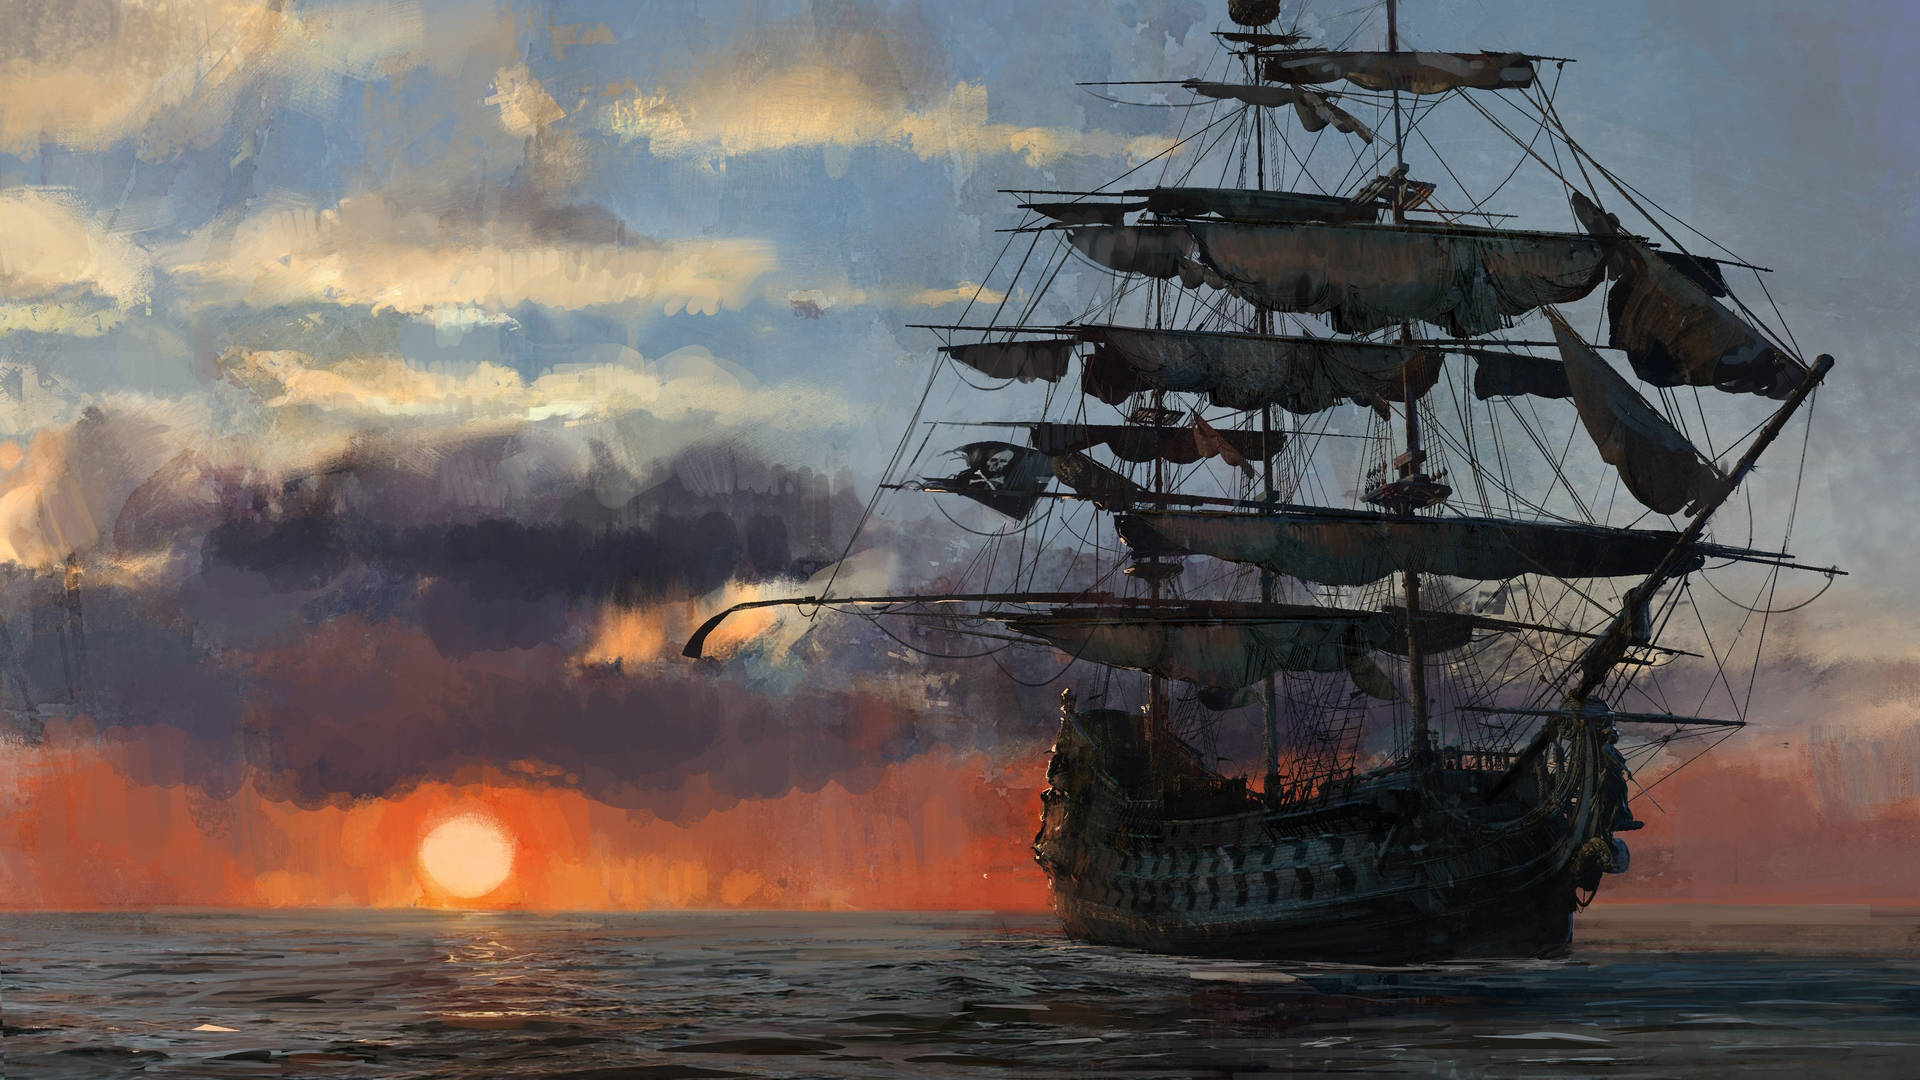 Pirate Ship Sunset Painting Wallpaper